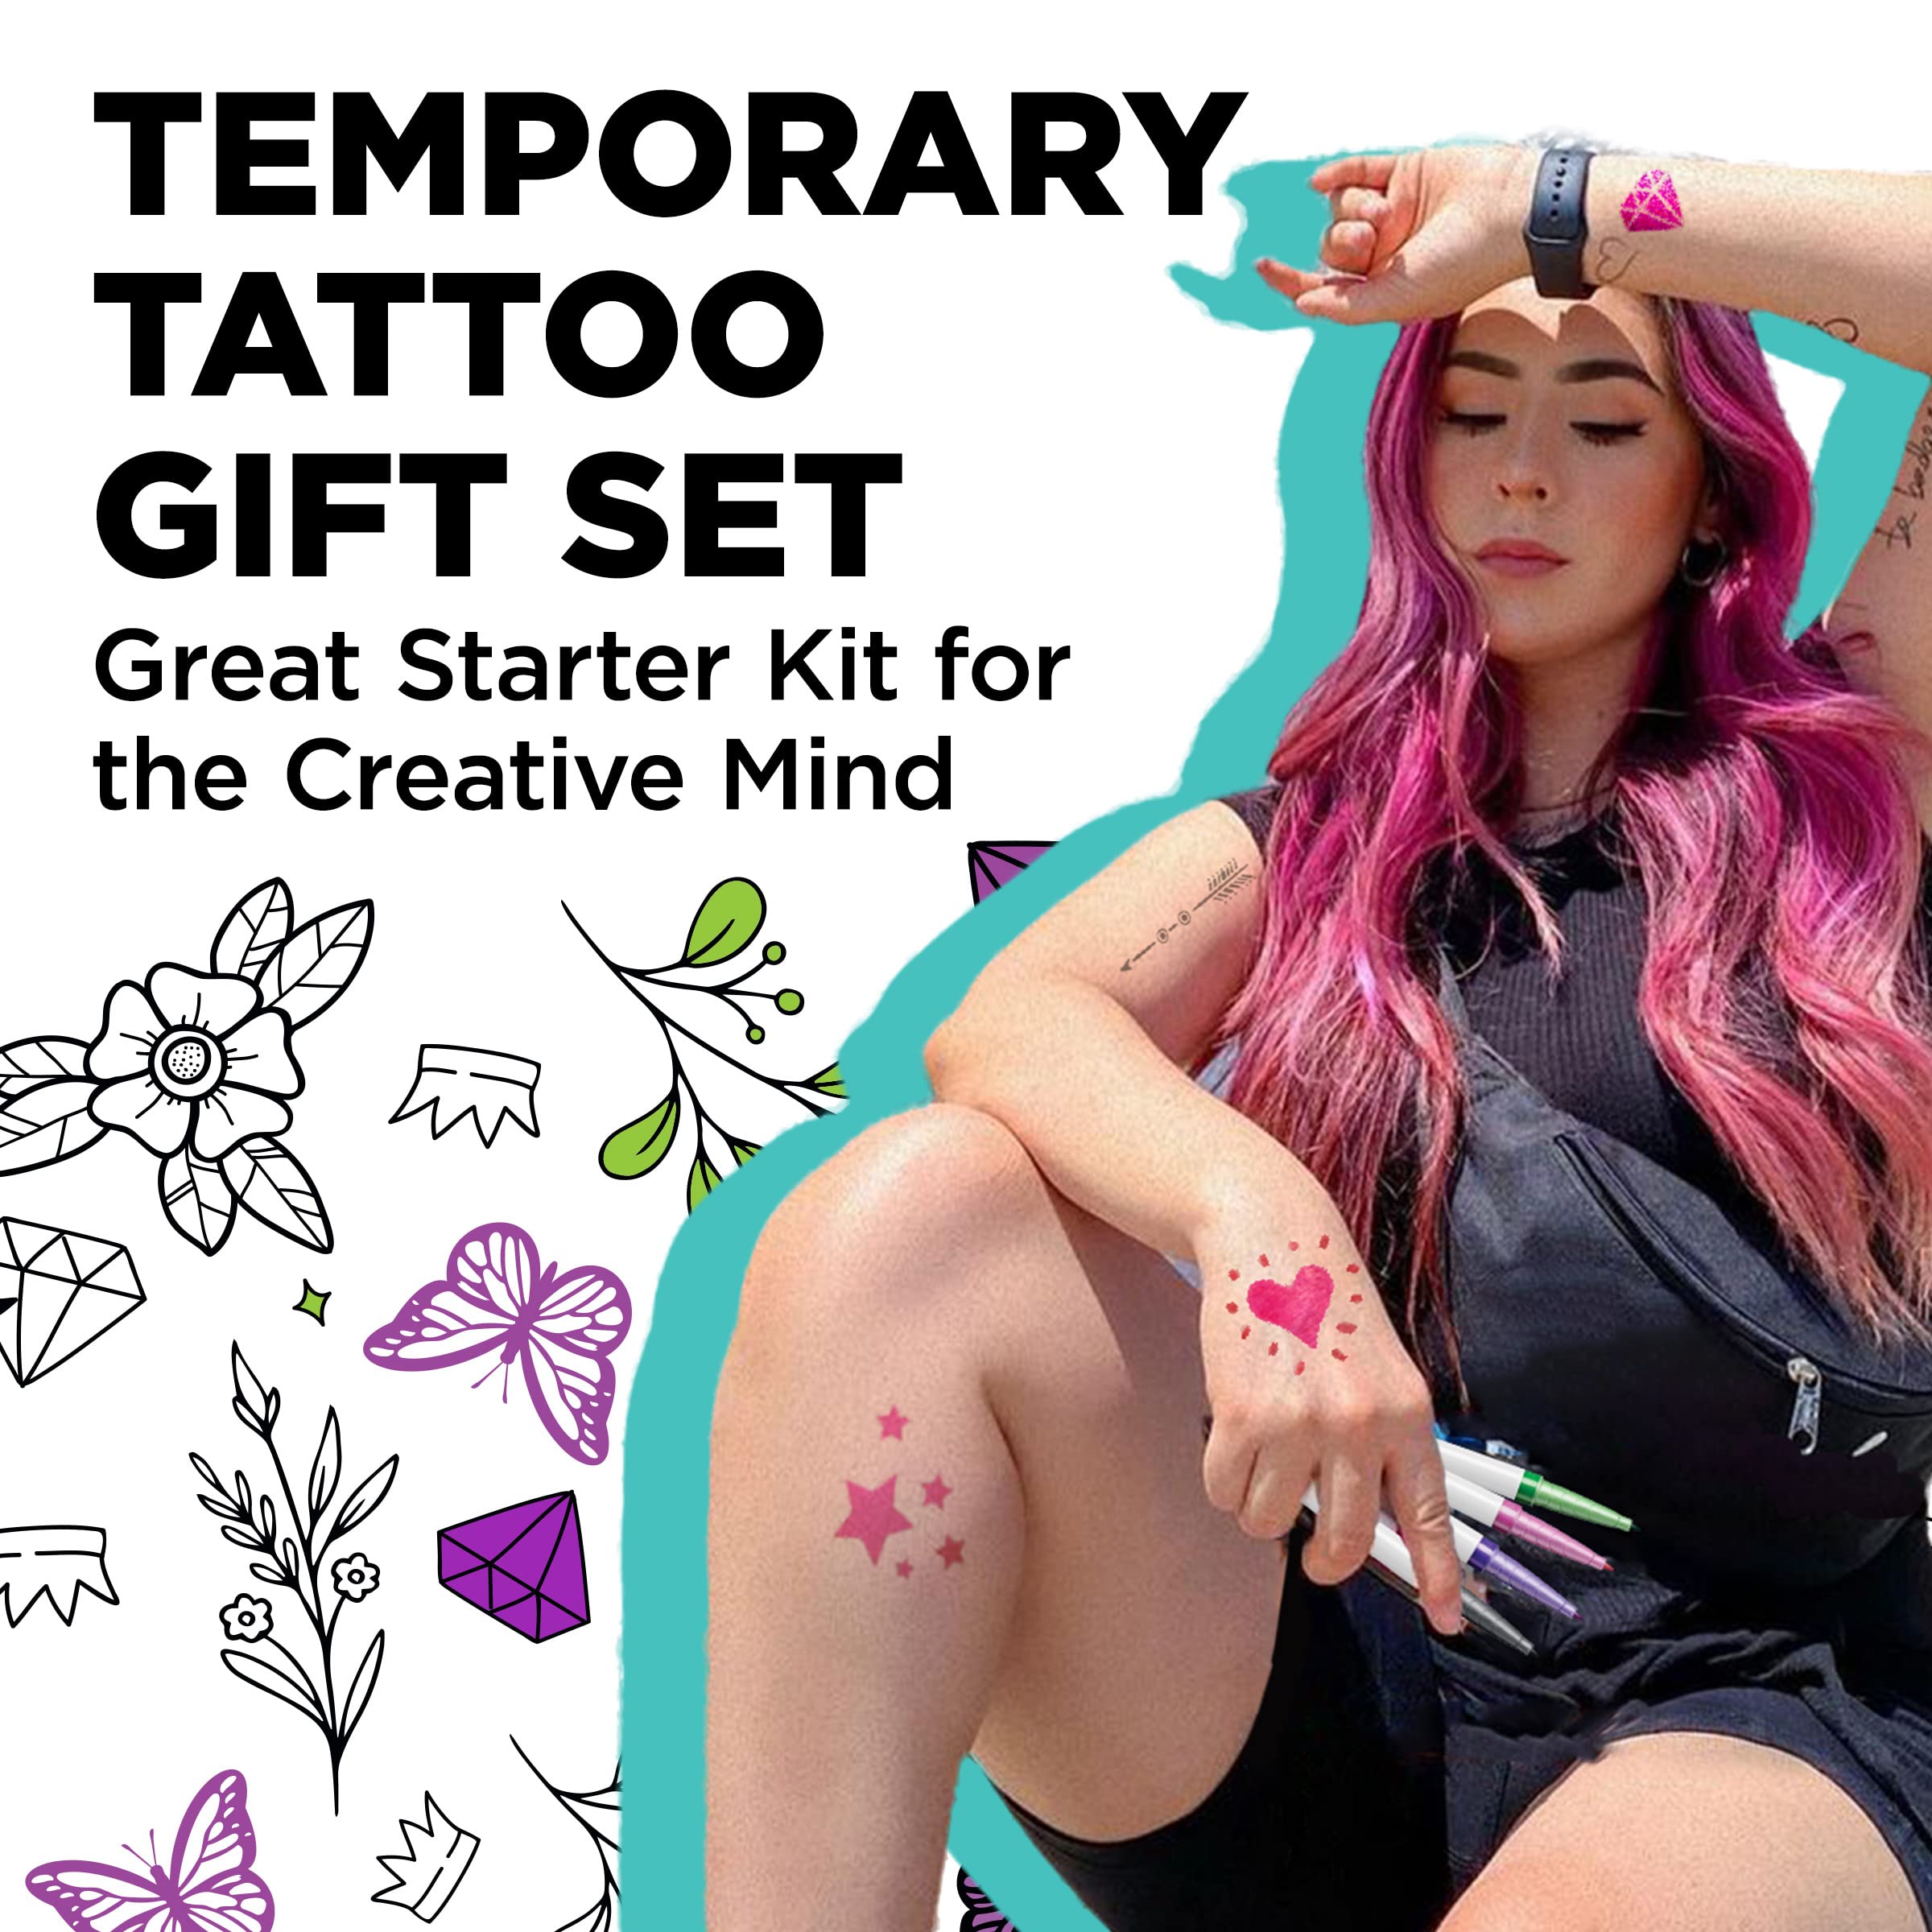 BodyMark Gift Set Temporary Tattoo Marker for Skin, Premium Brush Tip, 4 Count Pack of Assorted Colors and Stencils, Skin-Safe Temporary Tattoo Markers Set